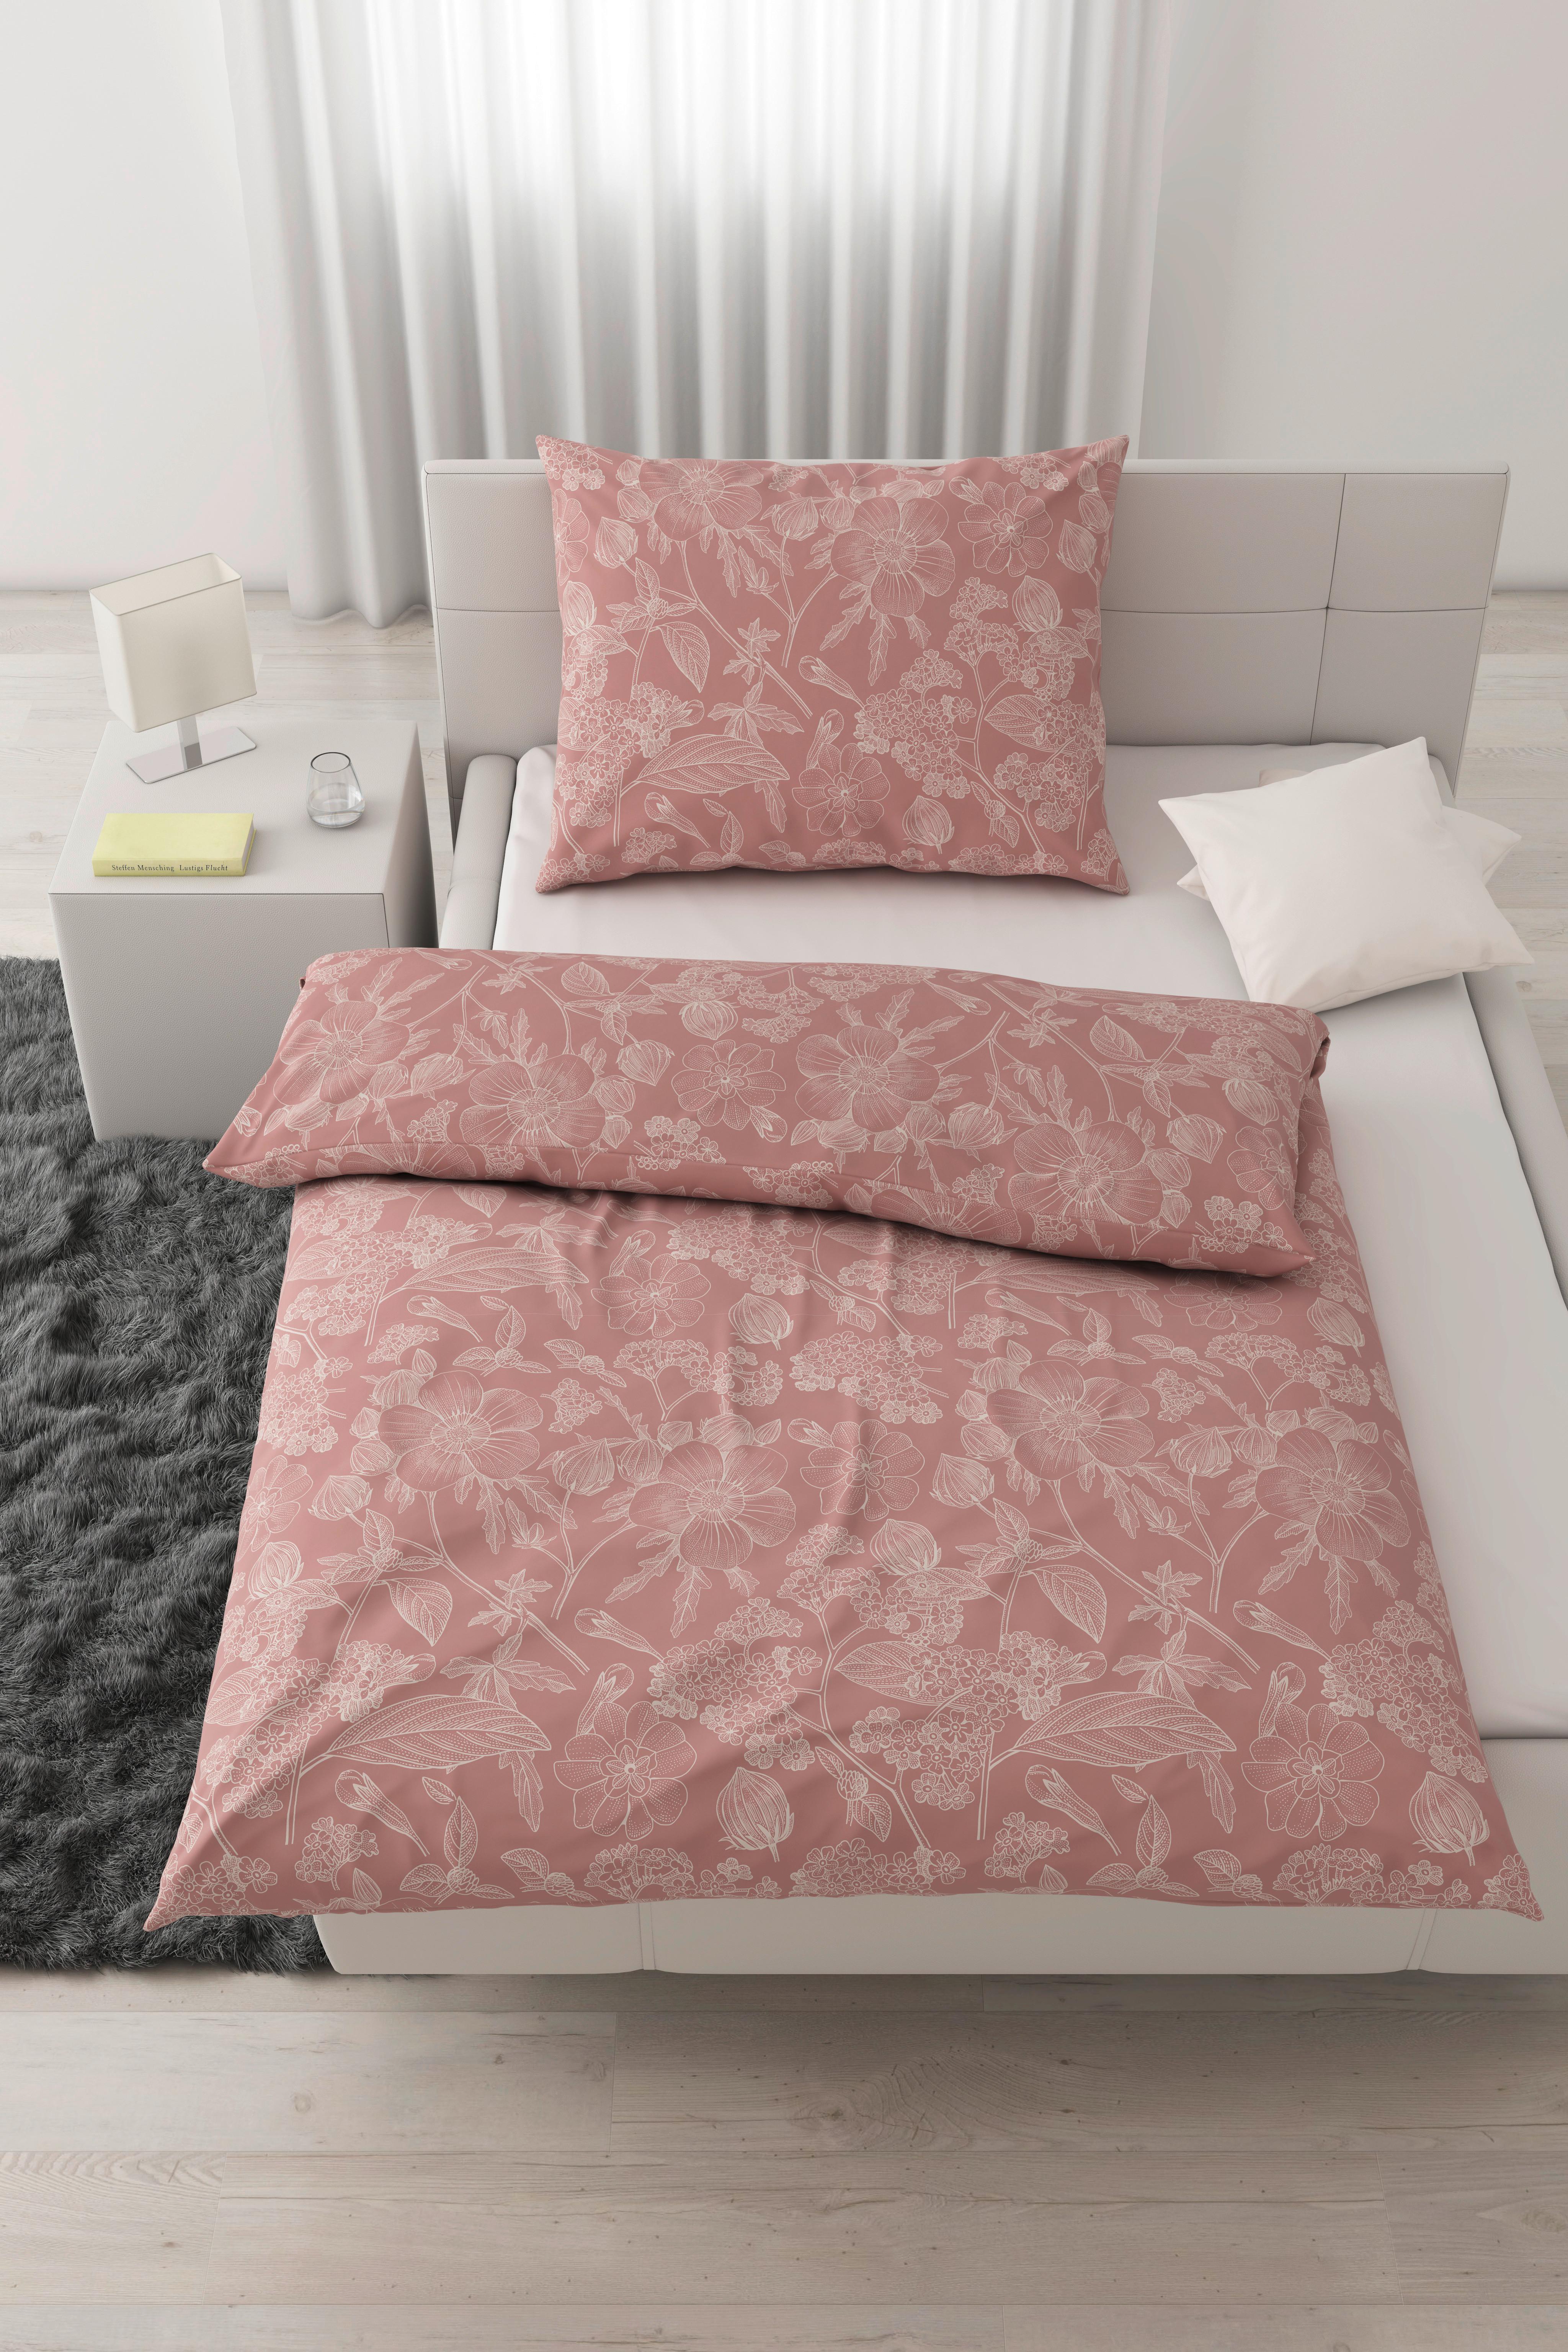 Posteljina 70/90cm 140/200cm Linette - ružičasta, Romantik / Landhaus, tekstil (140/200cm) - Modern Living